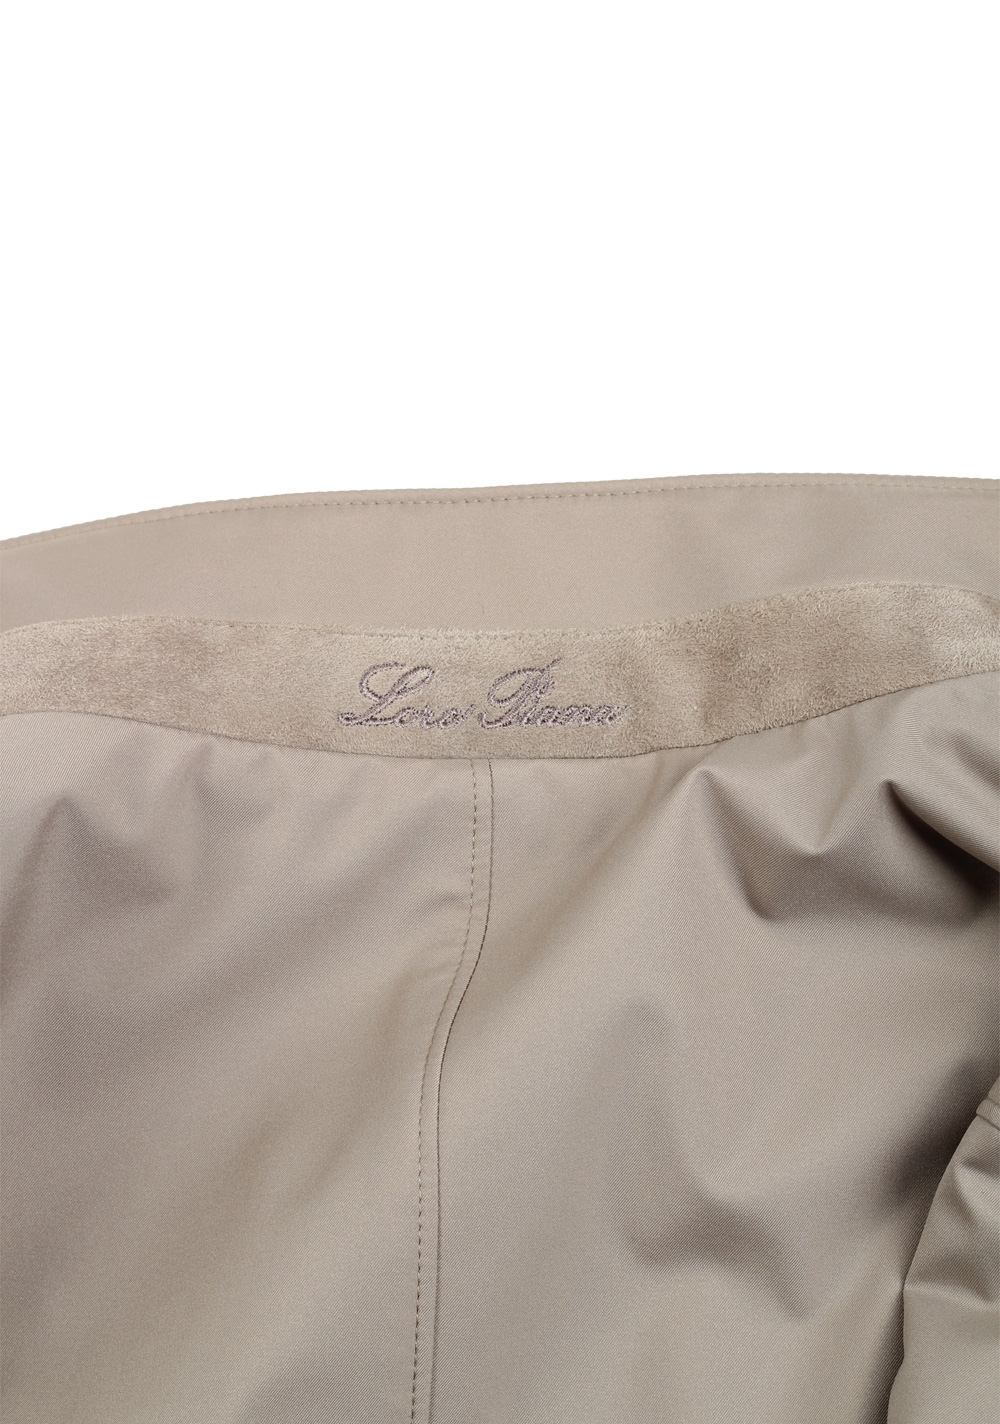 Loro Piana Reversible Storm System Rain Coat Size Small / 48 / 38R U.S. Outerwear | Costume Limité